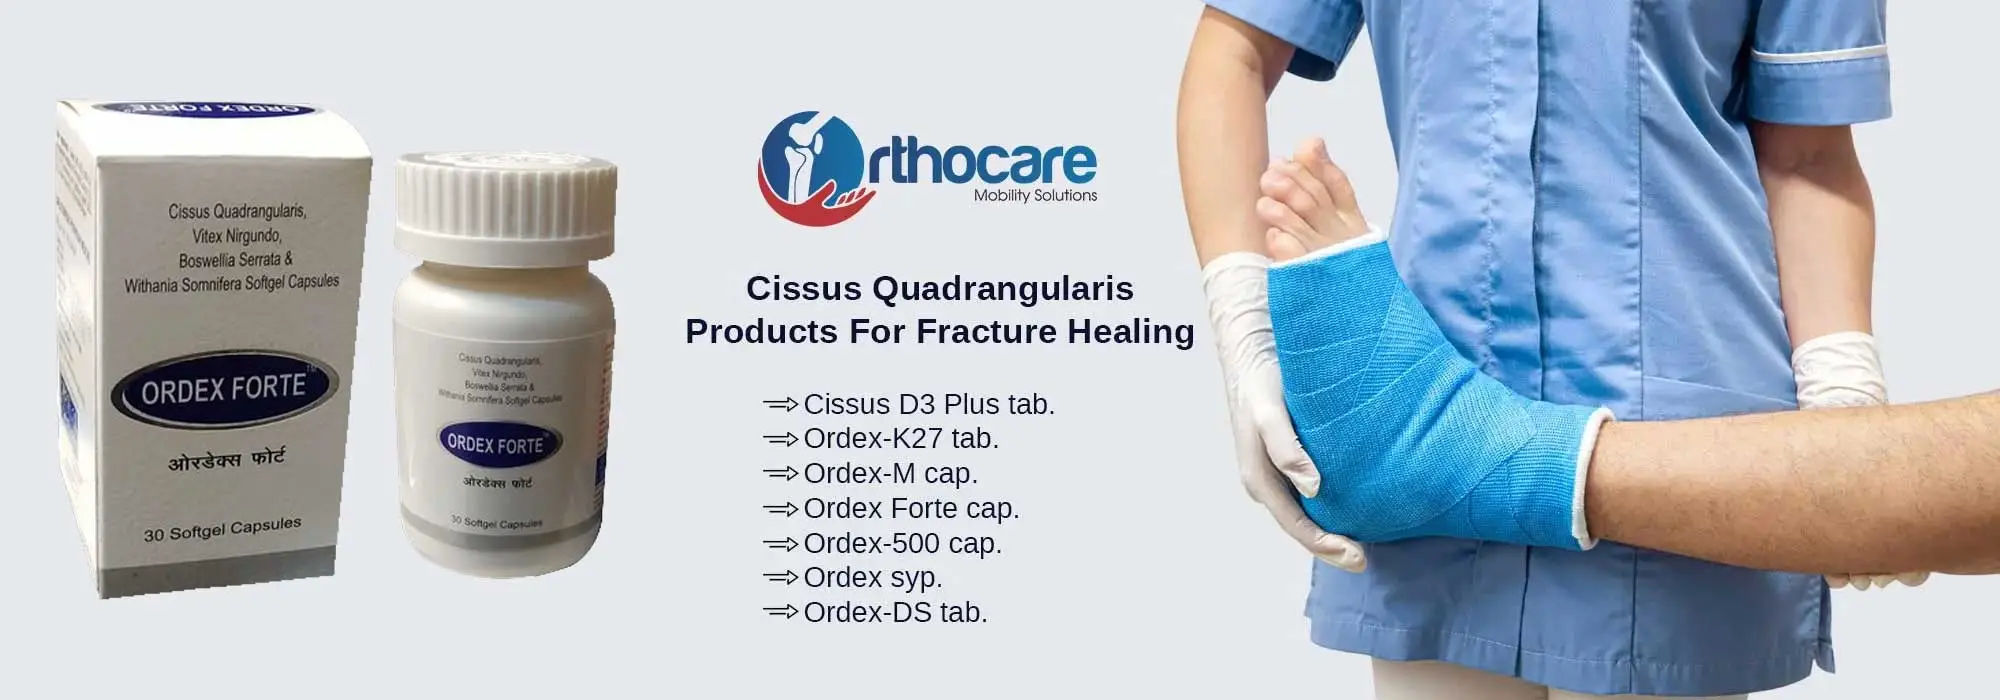 Cissus Quadrangularis Products For Fracture Healing Suppliers in Kendujhar